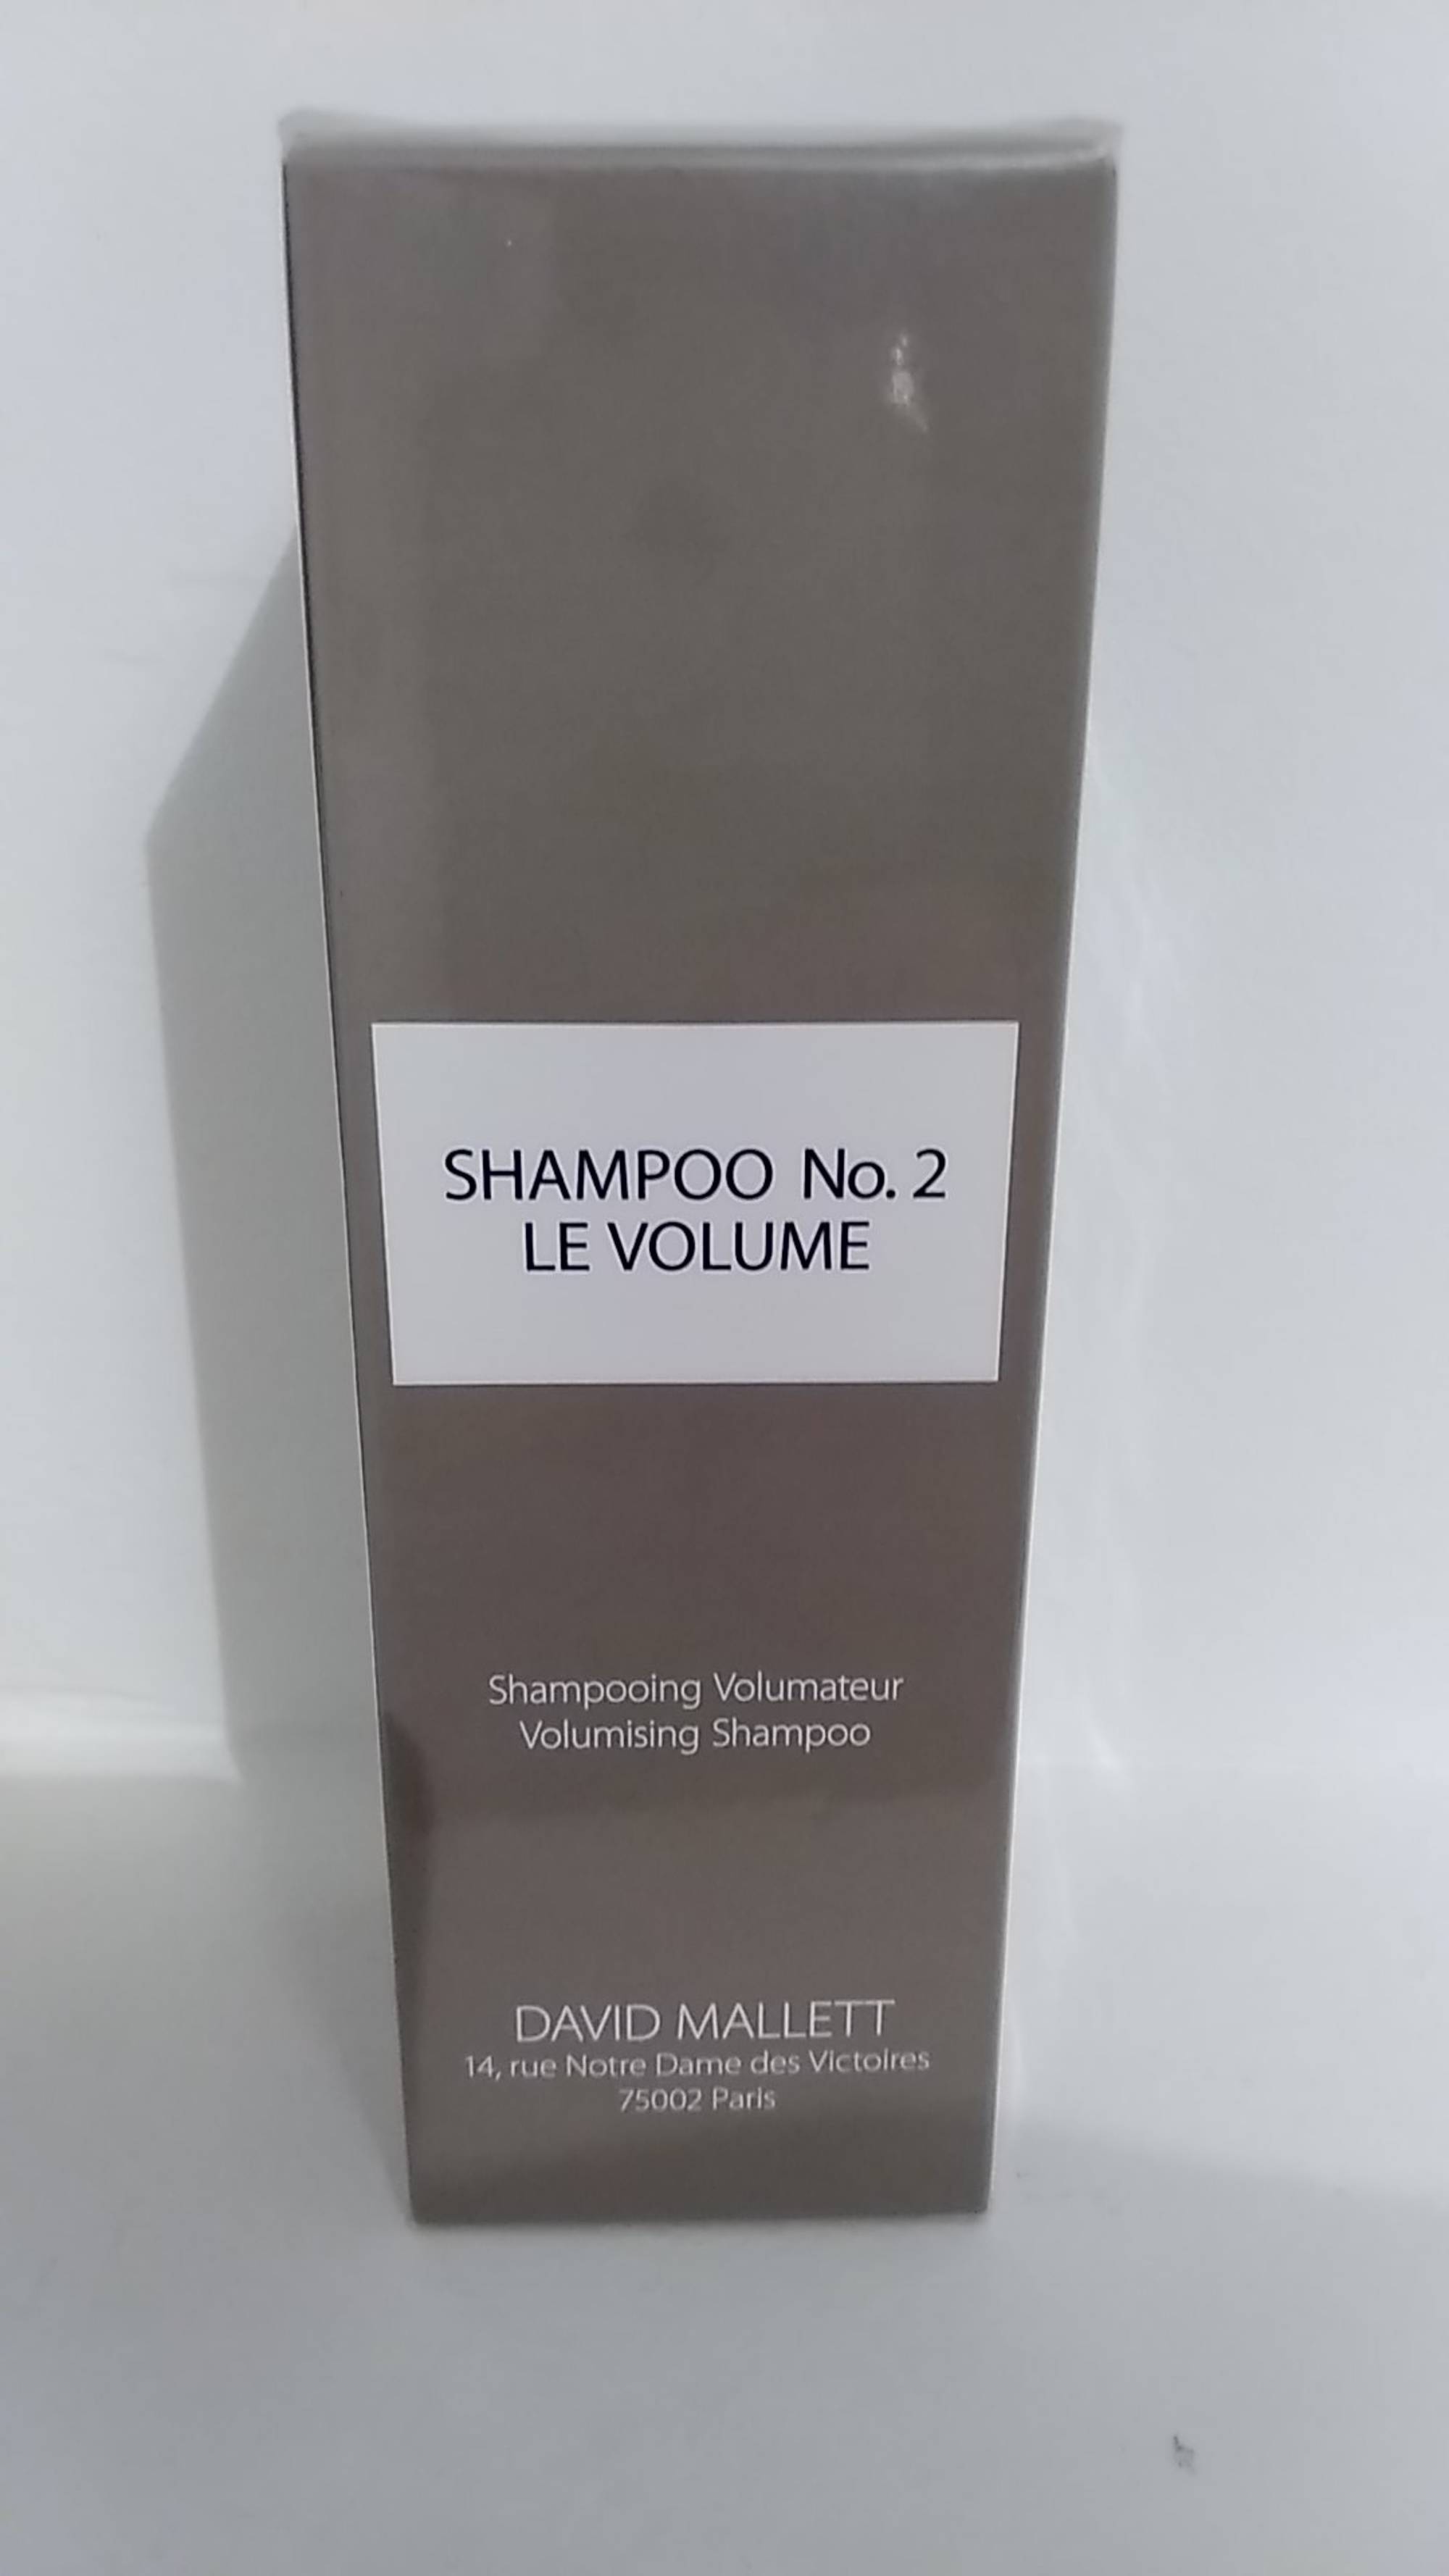 DAVID MALLETT - Shampoo no 2 le volume - Shampooing volumateur